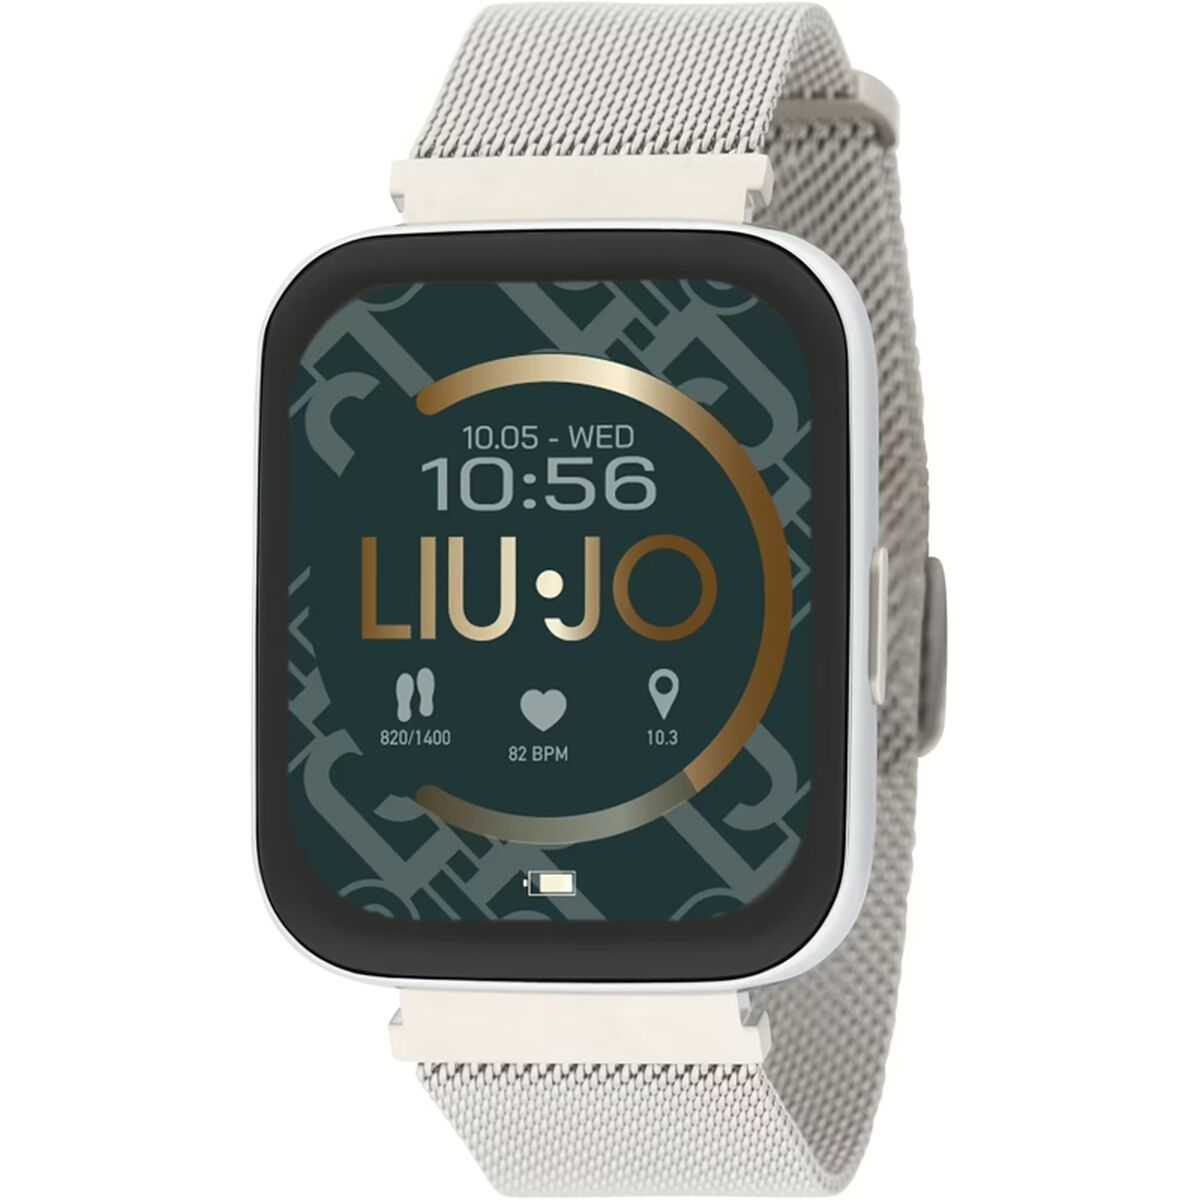 Kaufe Smartwatch LIU JO SWLJ081 bei AWK Flagship um € 170.00